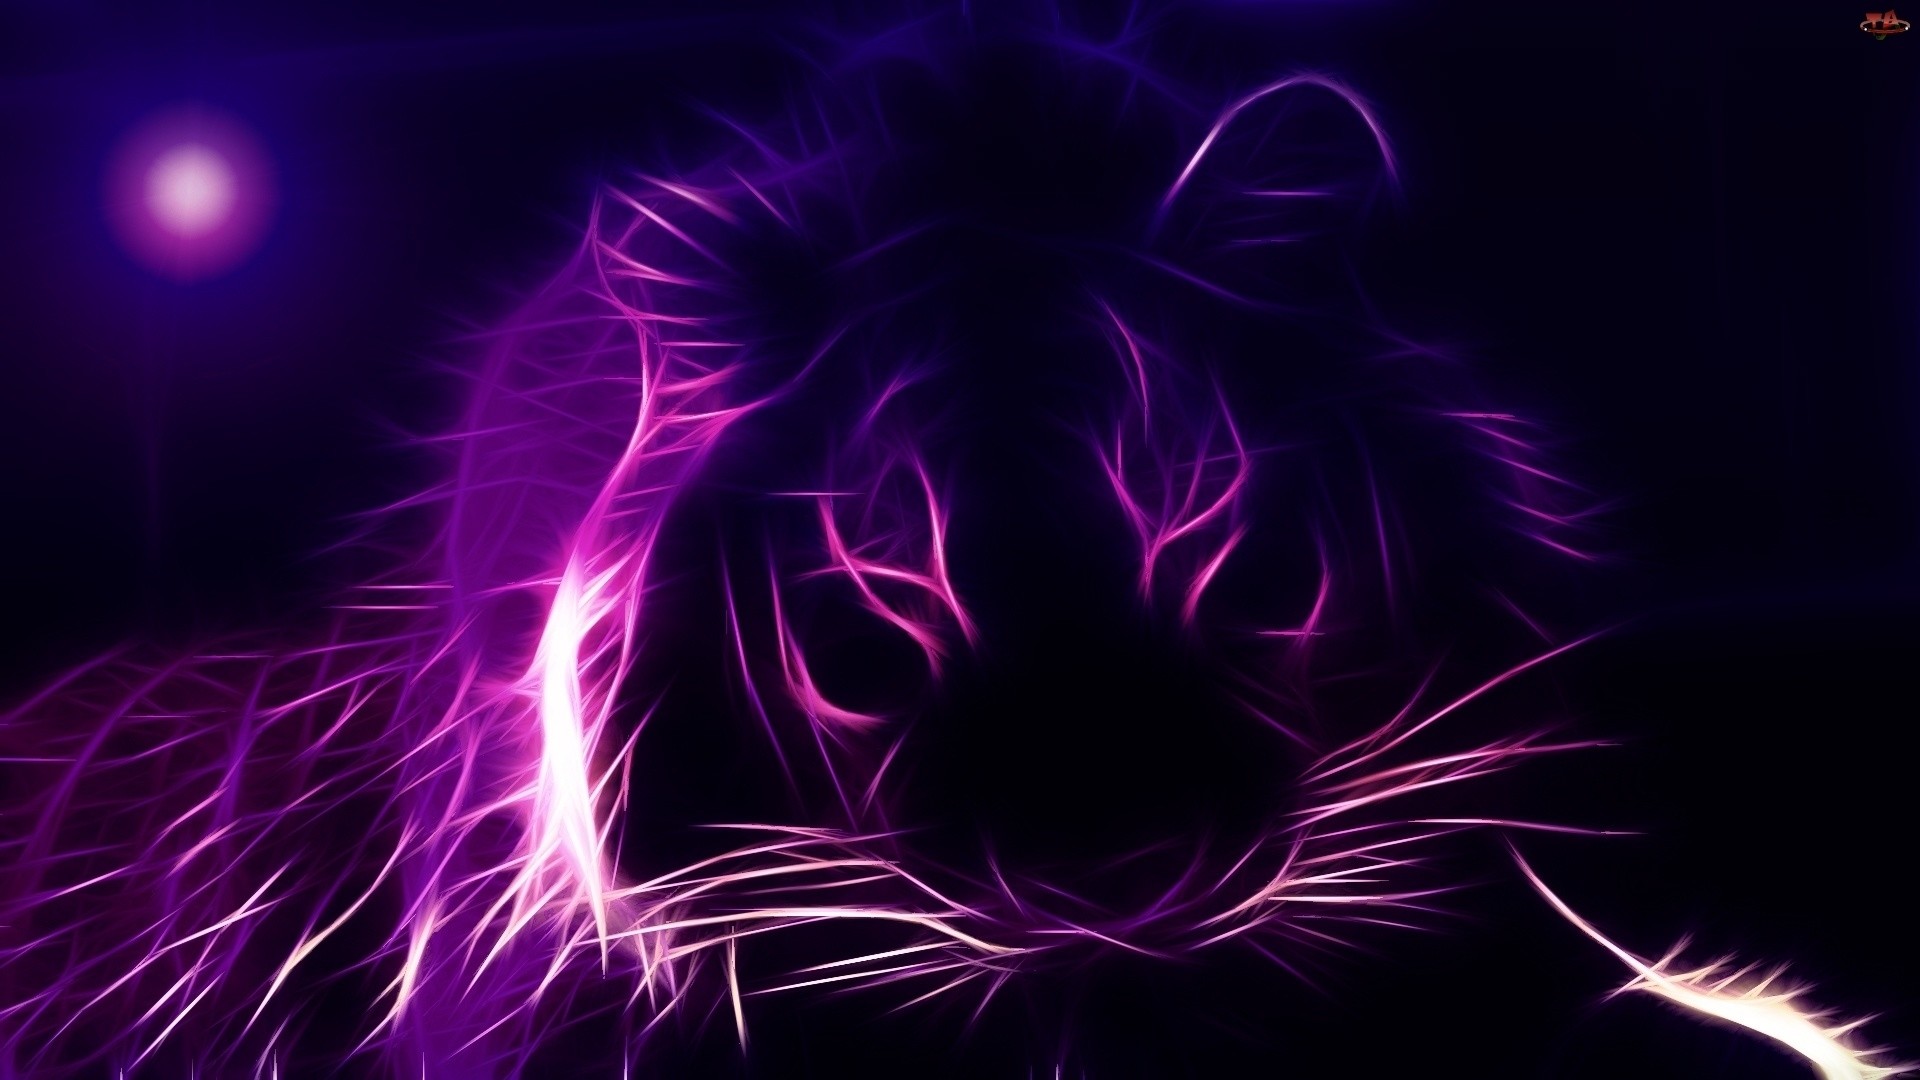 Explore Purple Wallpaper, Tiger Wallpaper, and more!